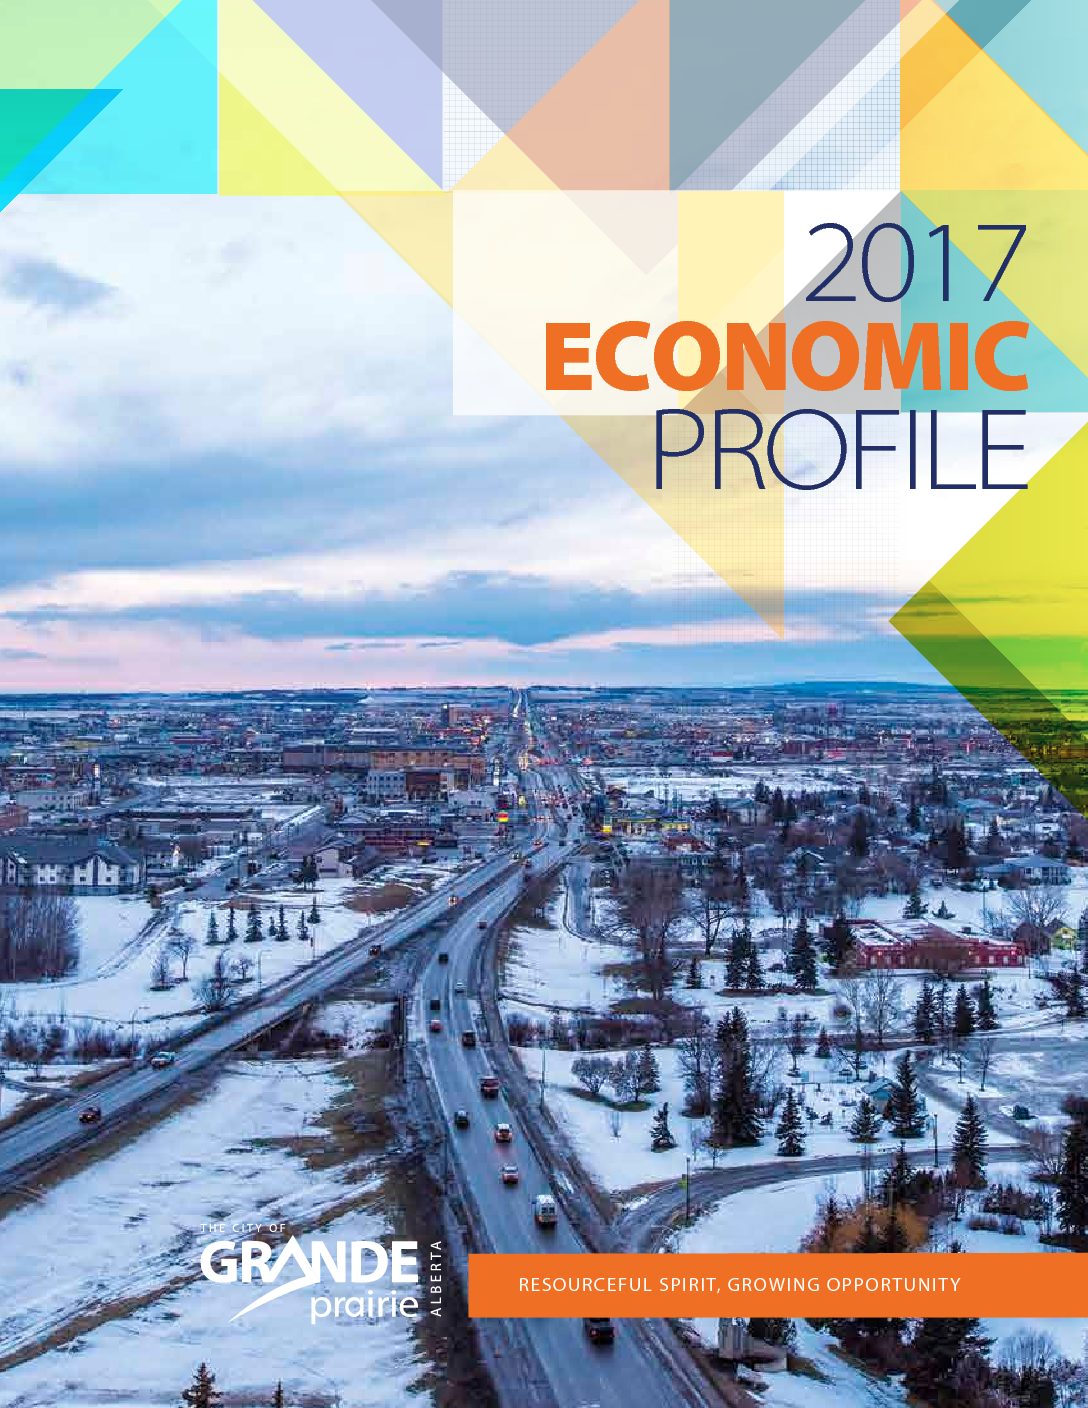 City of Grande Prairie – 2017 Economic Profile